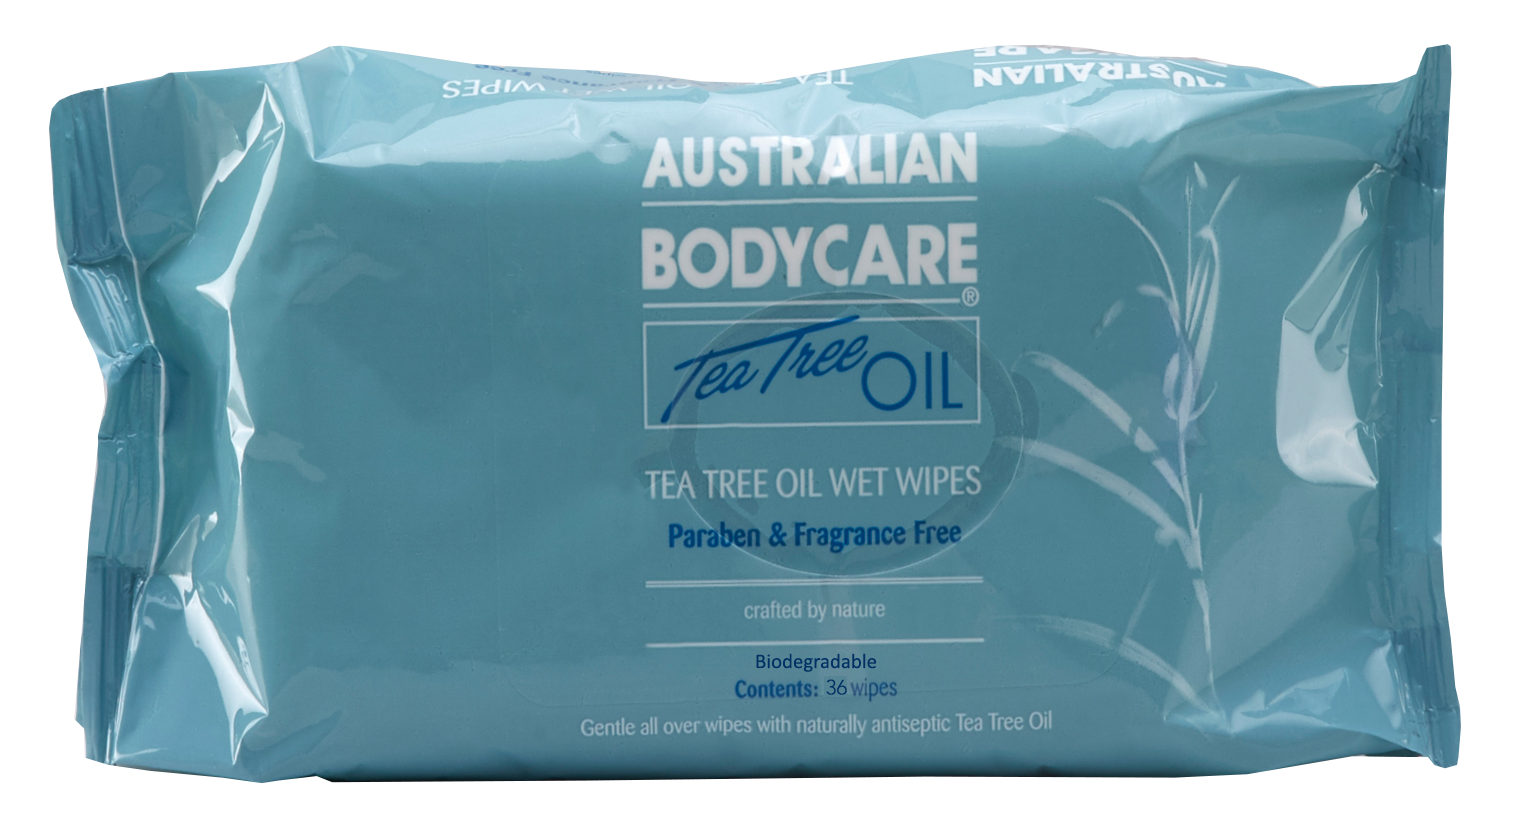 Australian Bodycare Tea Tree Oil Wipes